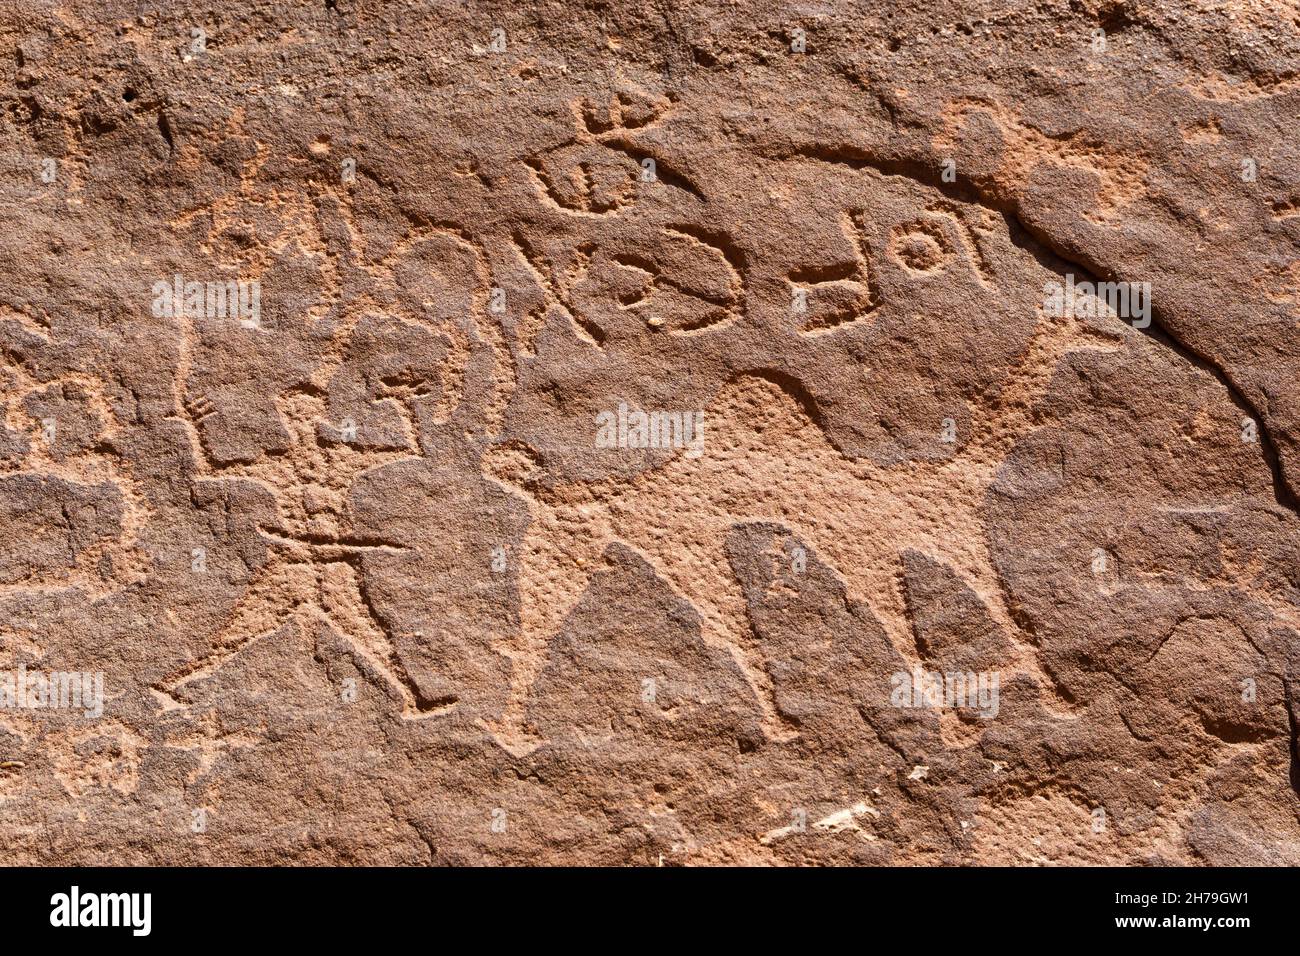 Closeup view of a petroglyph featuring a camel and a man in Wadi Rum, Jordan Stock Photo